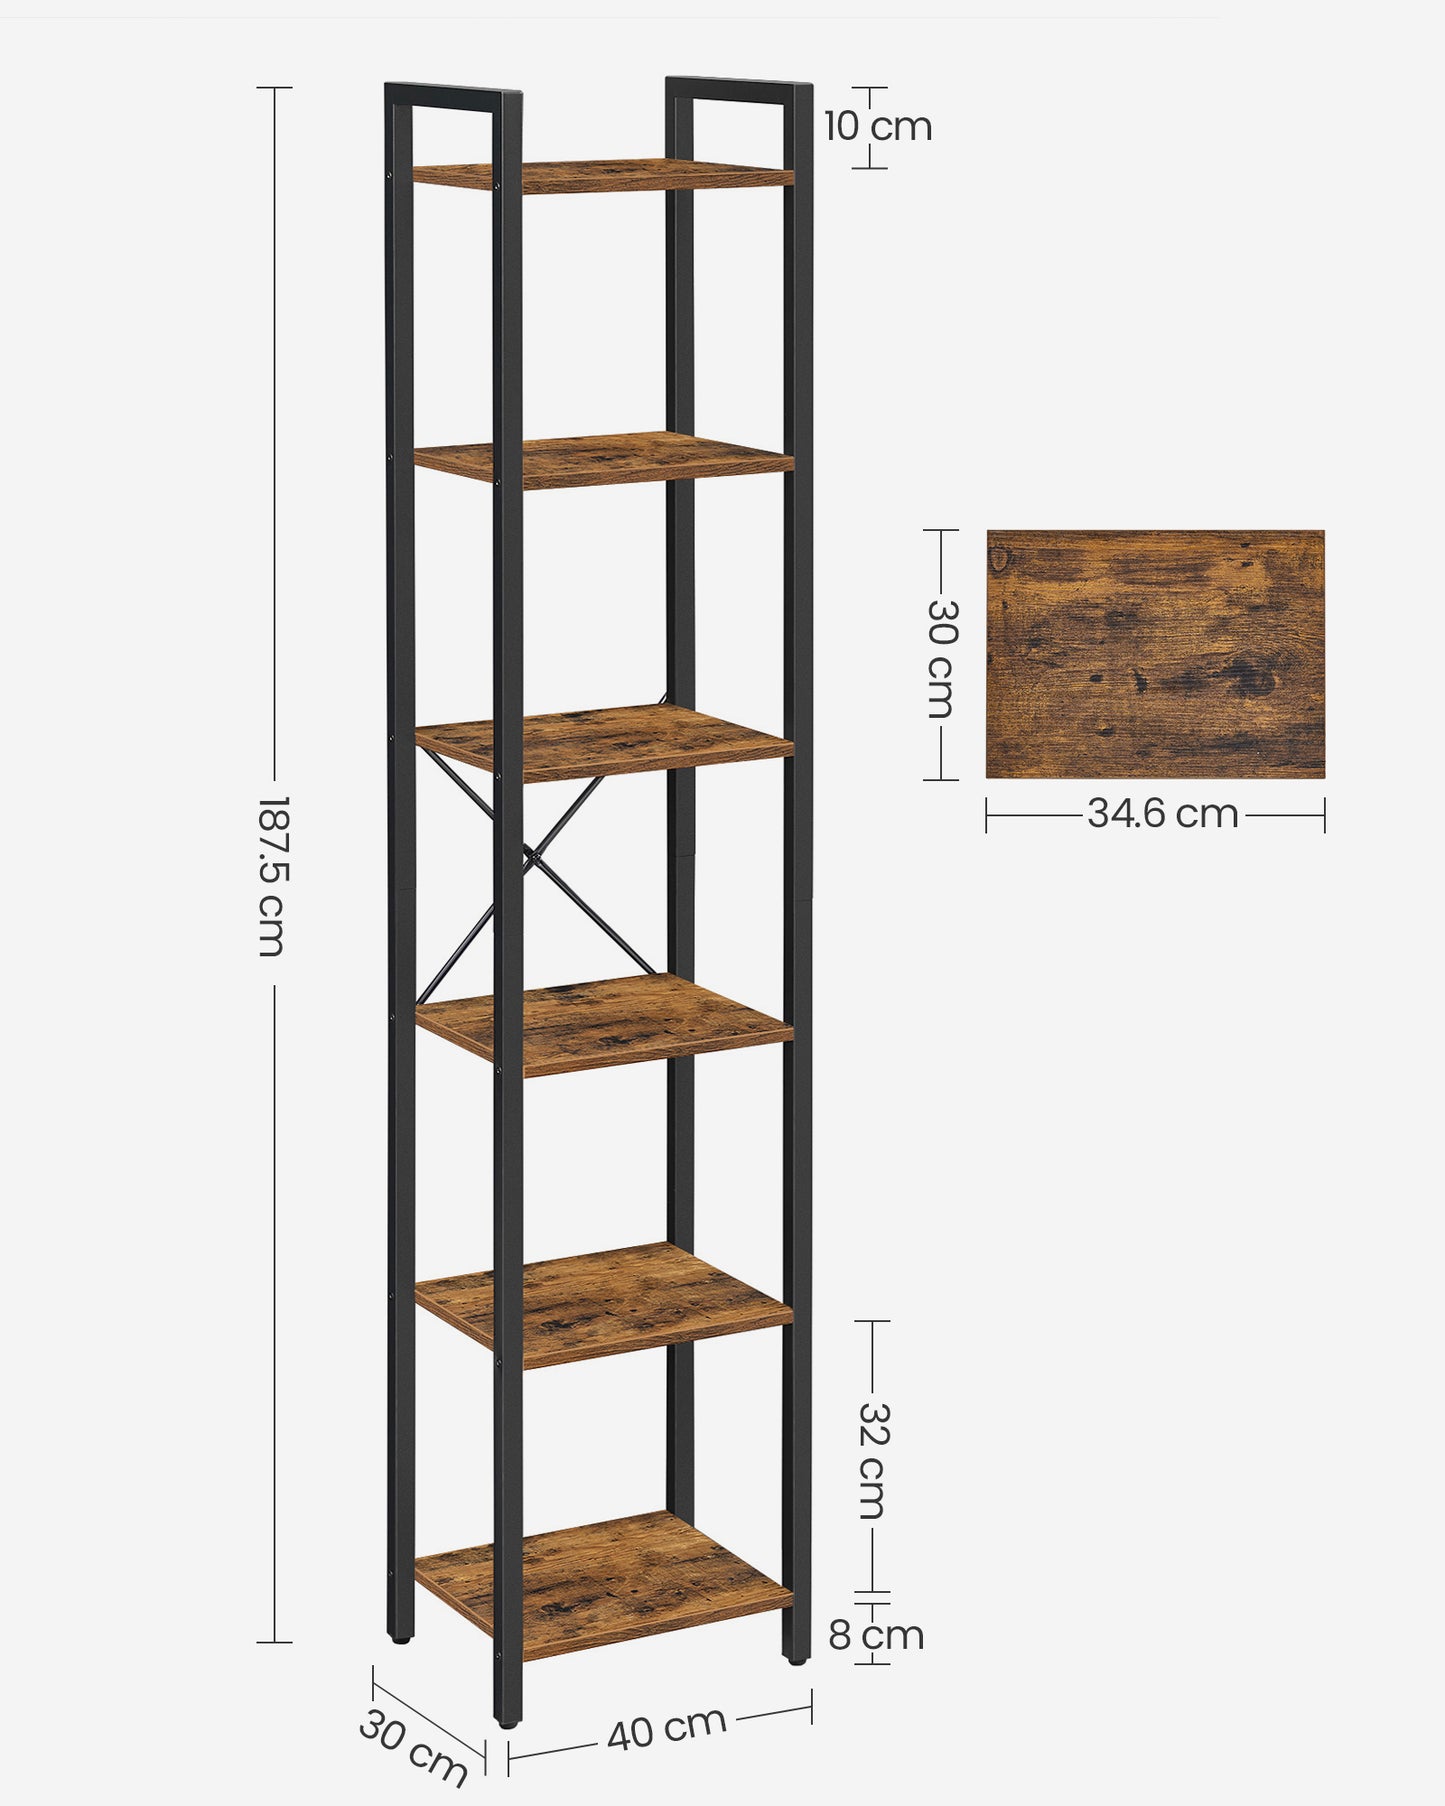 6-Tier Bookshelf, Bookcase, Open Storage Shelving, 40 x 30 x 178.6 cm, Industrial, Rustic Brown and Black, VASAGLE, 7